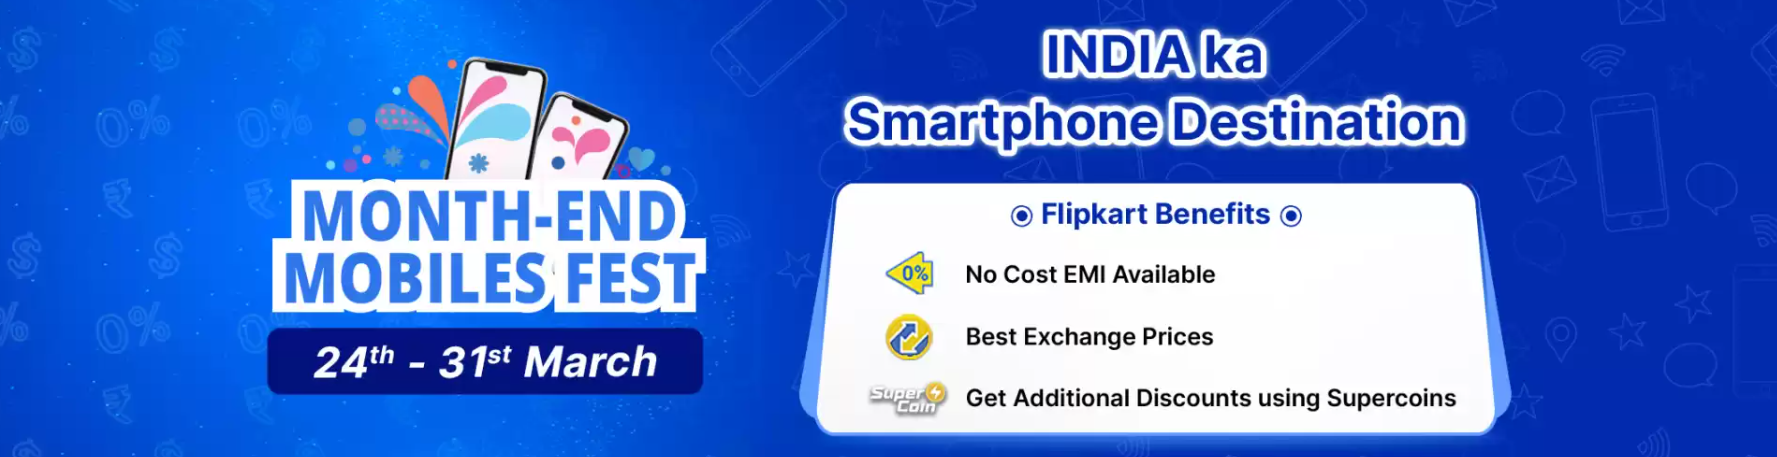 Flipkart Month End Mobile Fest